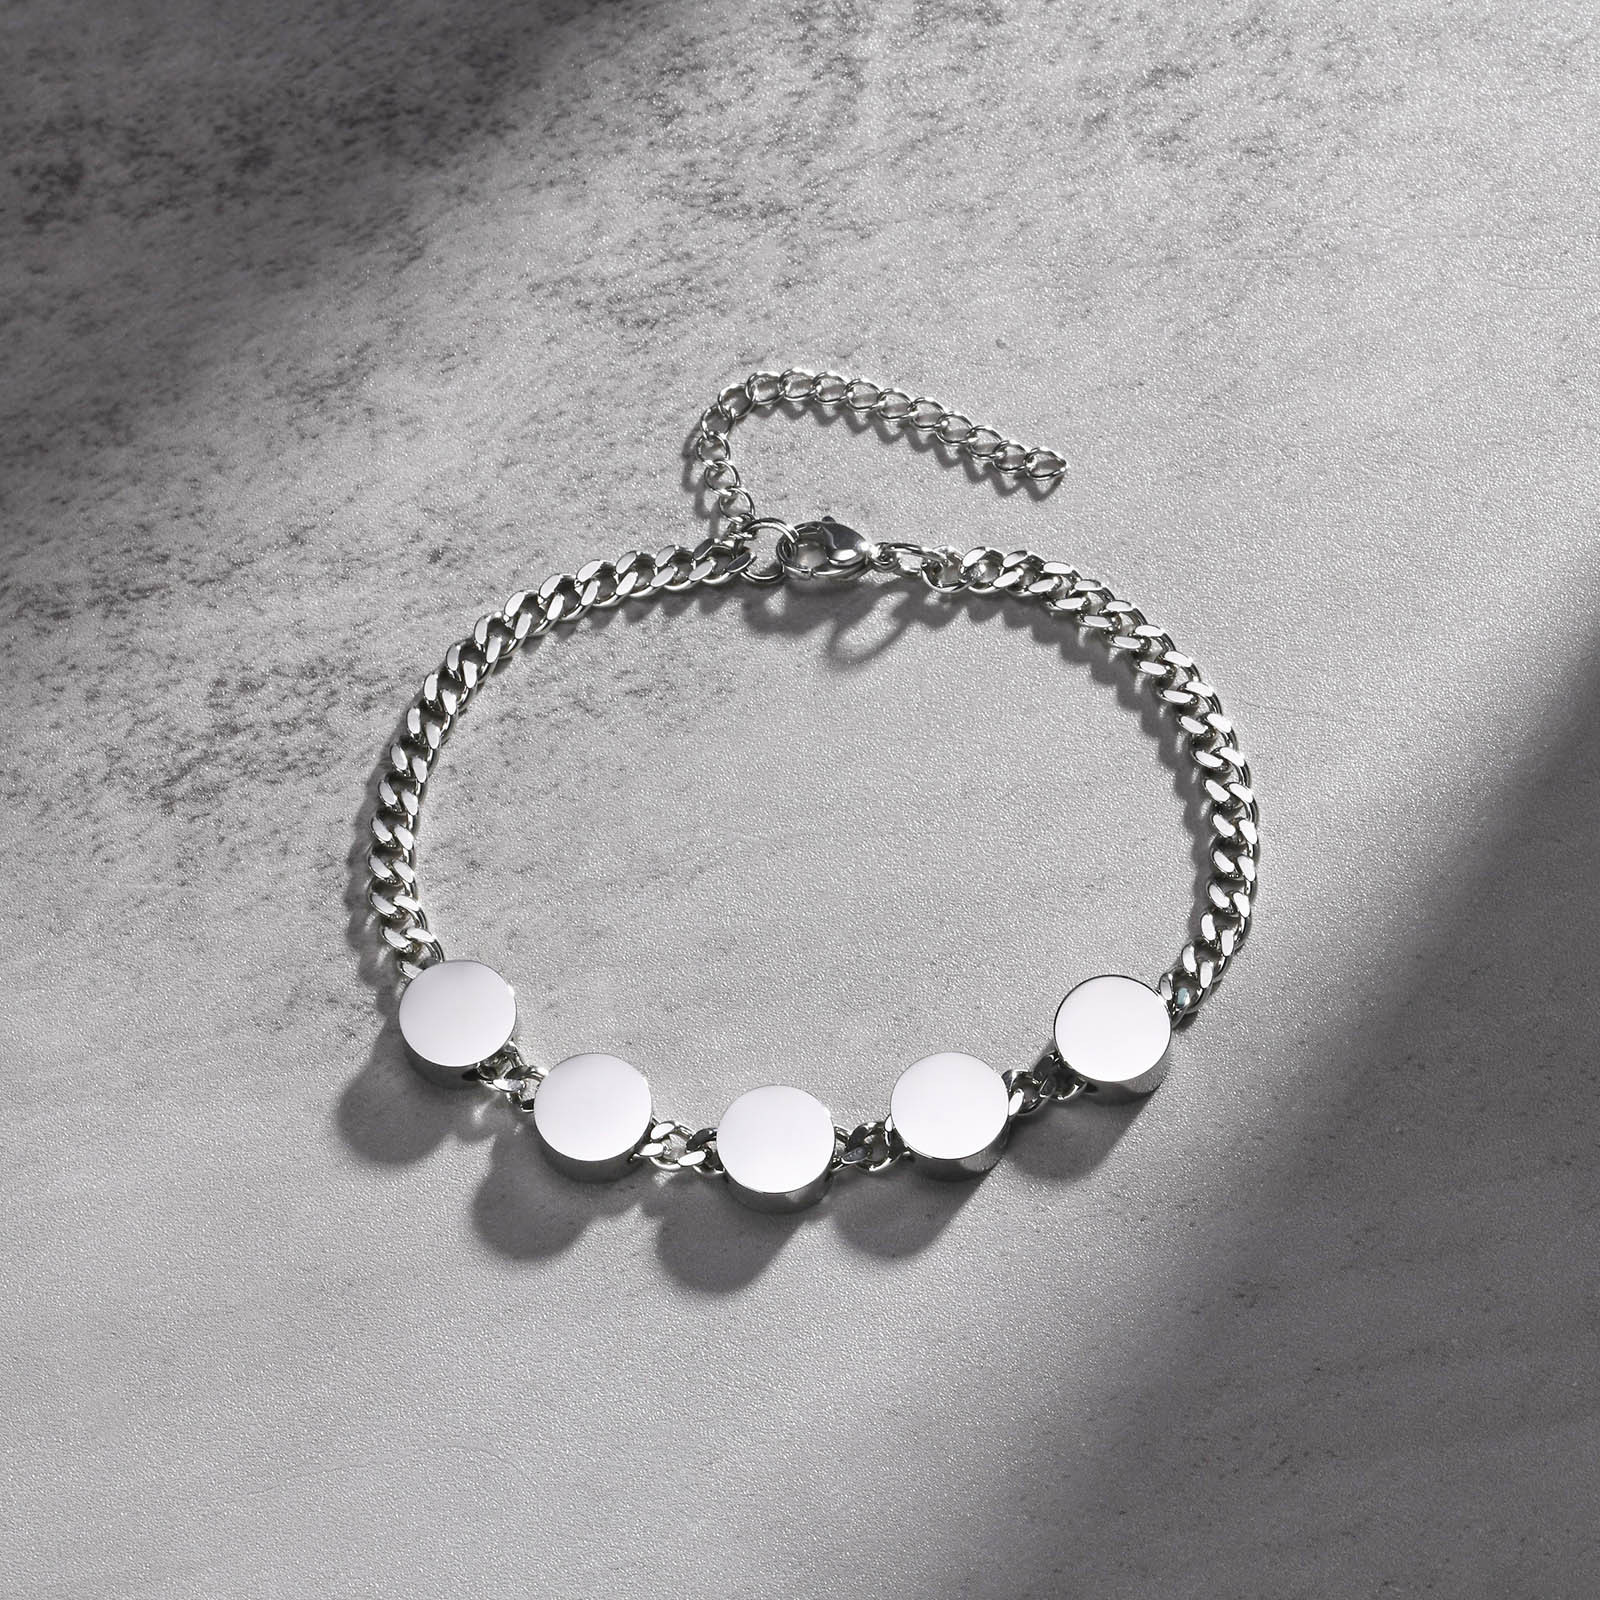 5 accessory [blank] bracelet